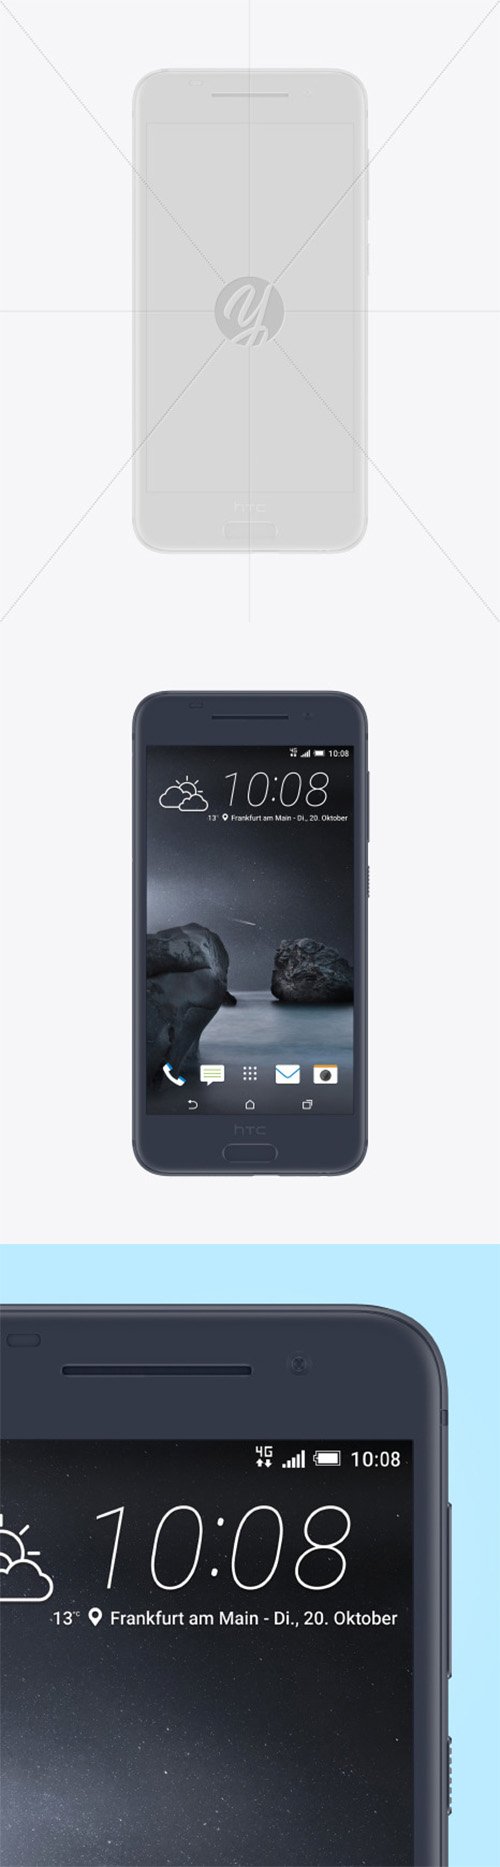 Clay HTC A9 Phone Mockup 51910 TIF